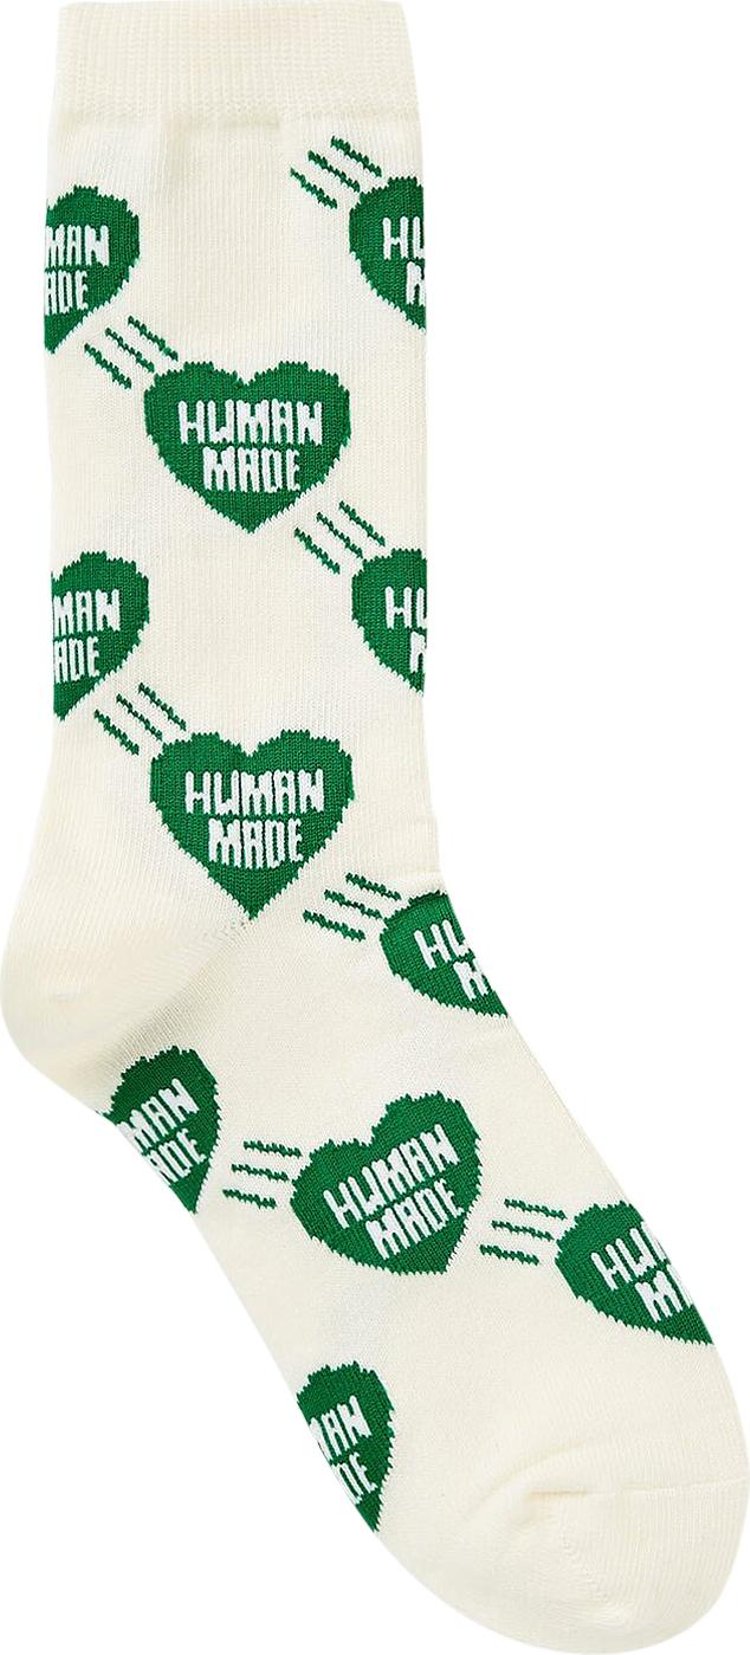 Human Made Heart Socks 'Green'